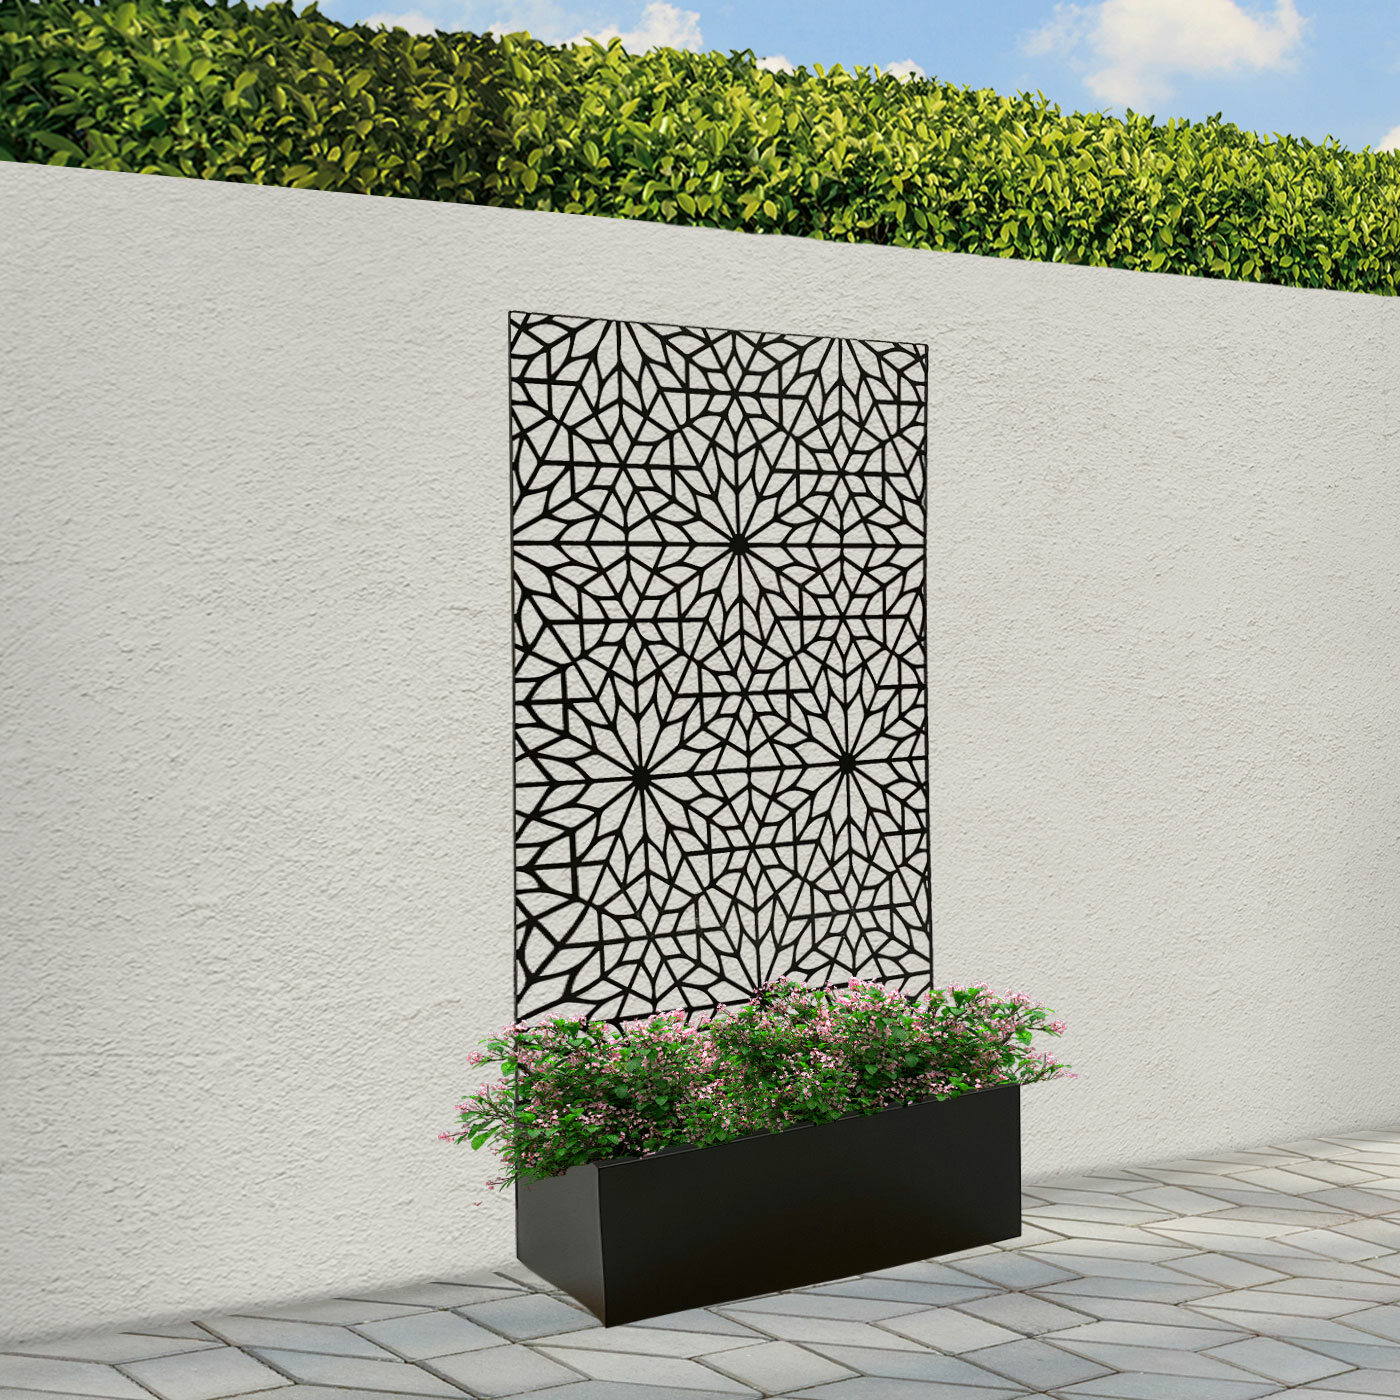 Amazon.com: Ujiabiz Decorative Metal Garden Fence 18